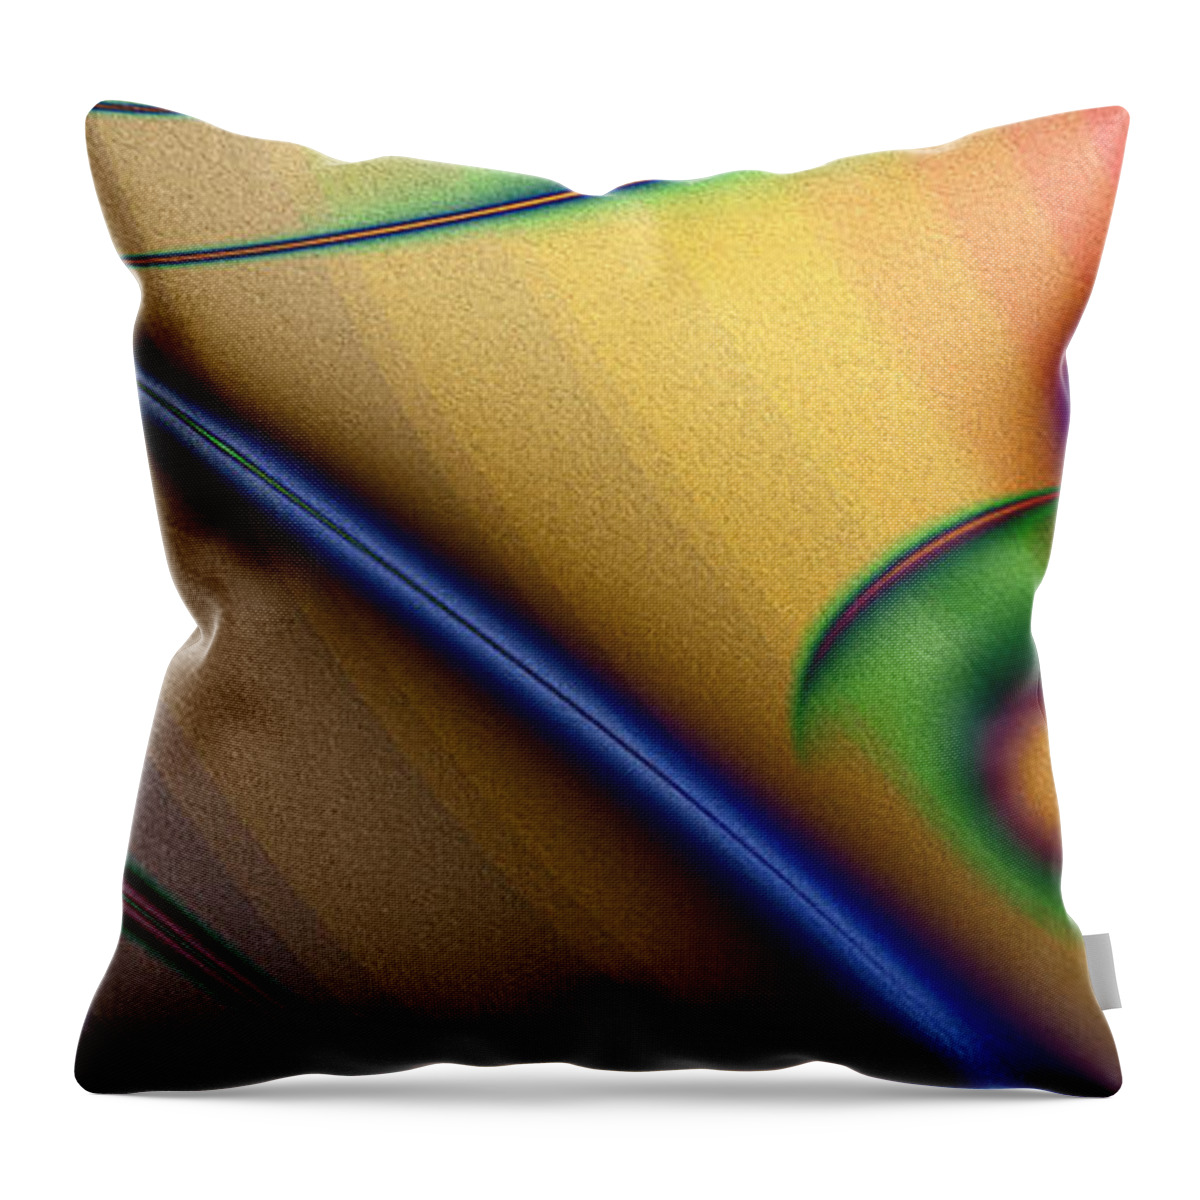 Abstract Throw Pillow featuring the digital art Loros de la Selva by Kiki Art